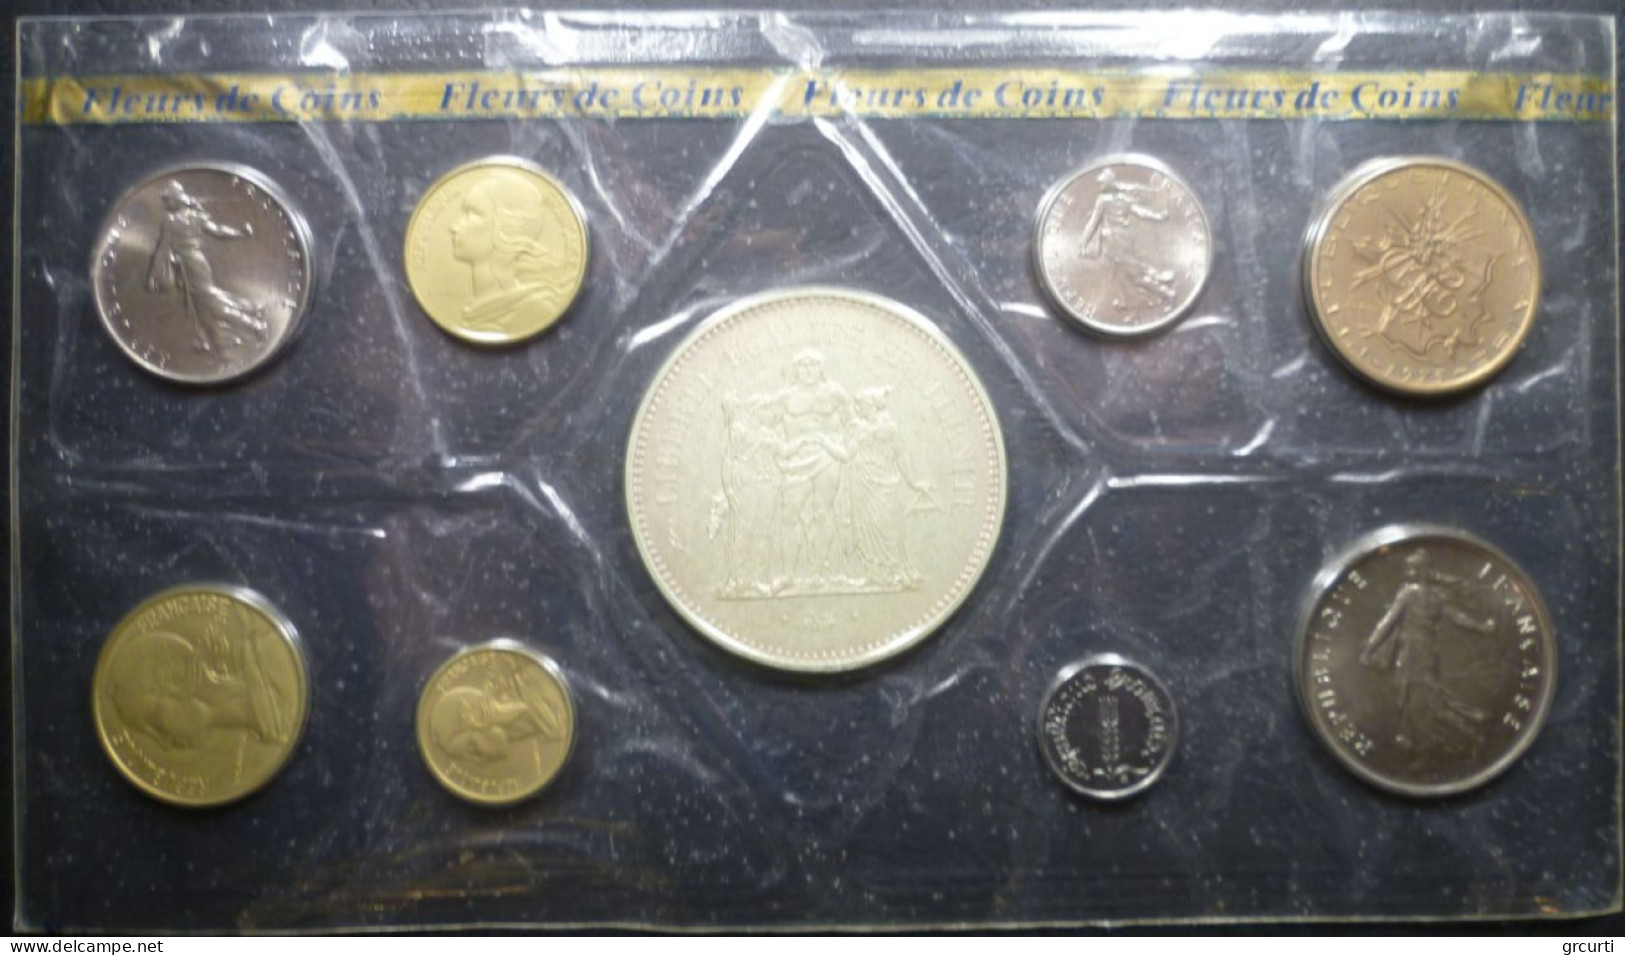 Francia - Set Fleurs De Coins 1975 - KM# SS12 - BU, BE, Astucci E Ripiani